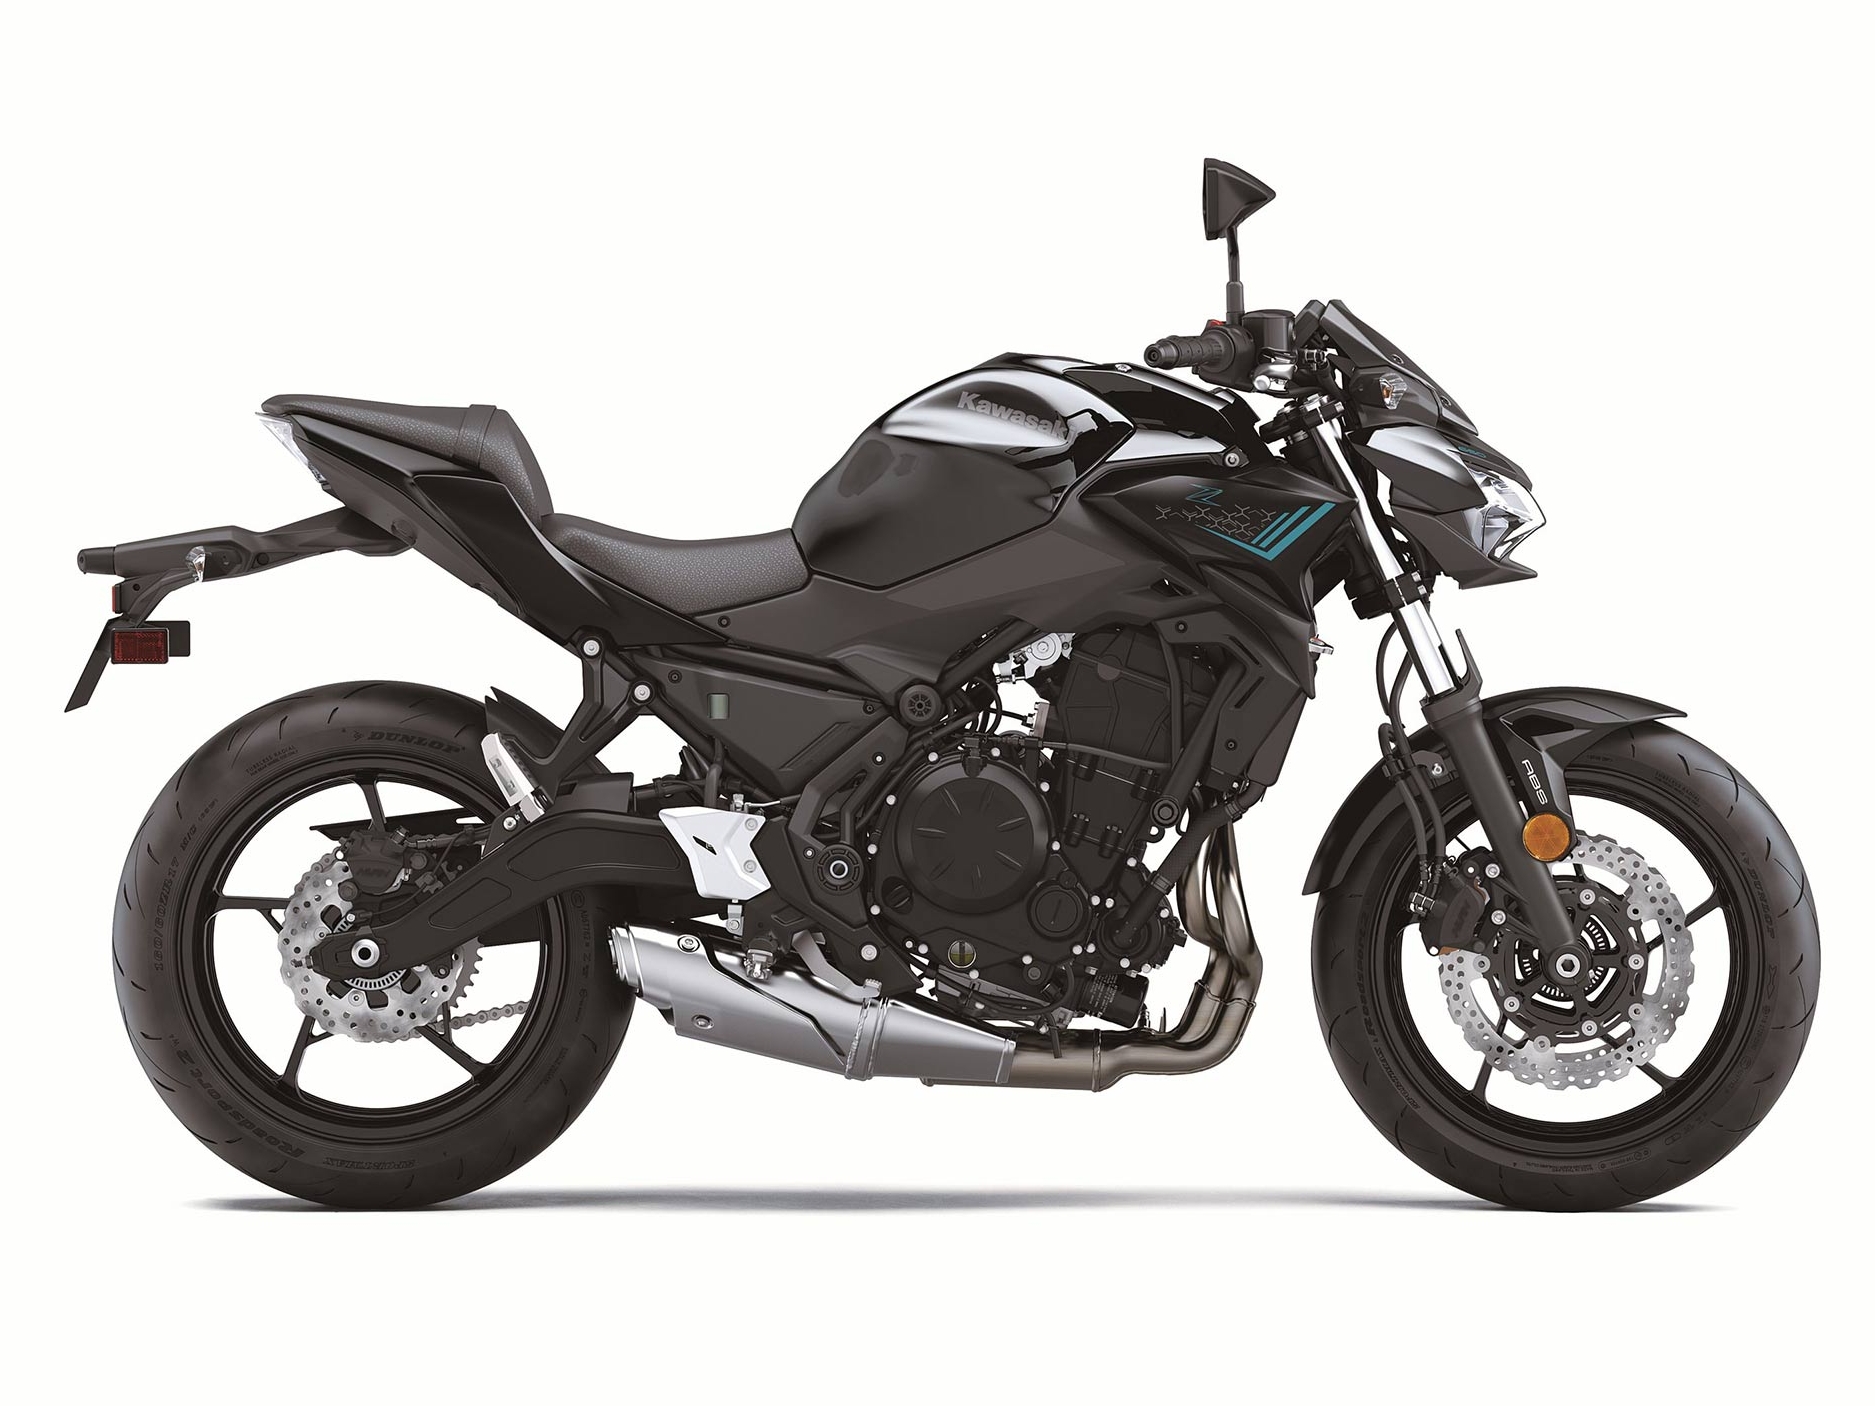 2021 Kawasaki Z650 Buyer's Guide: Specs, Photos, Price | Cycle World